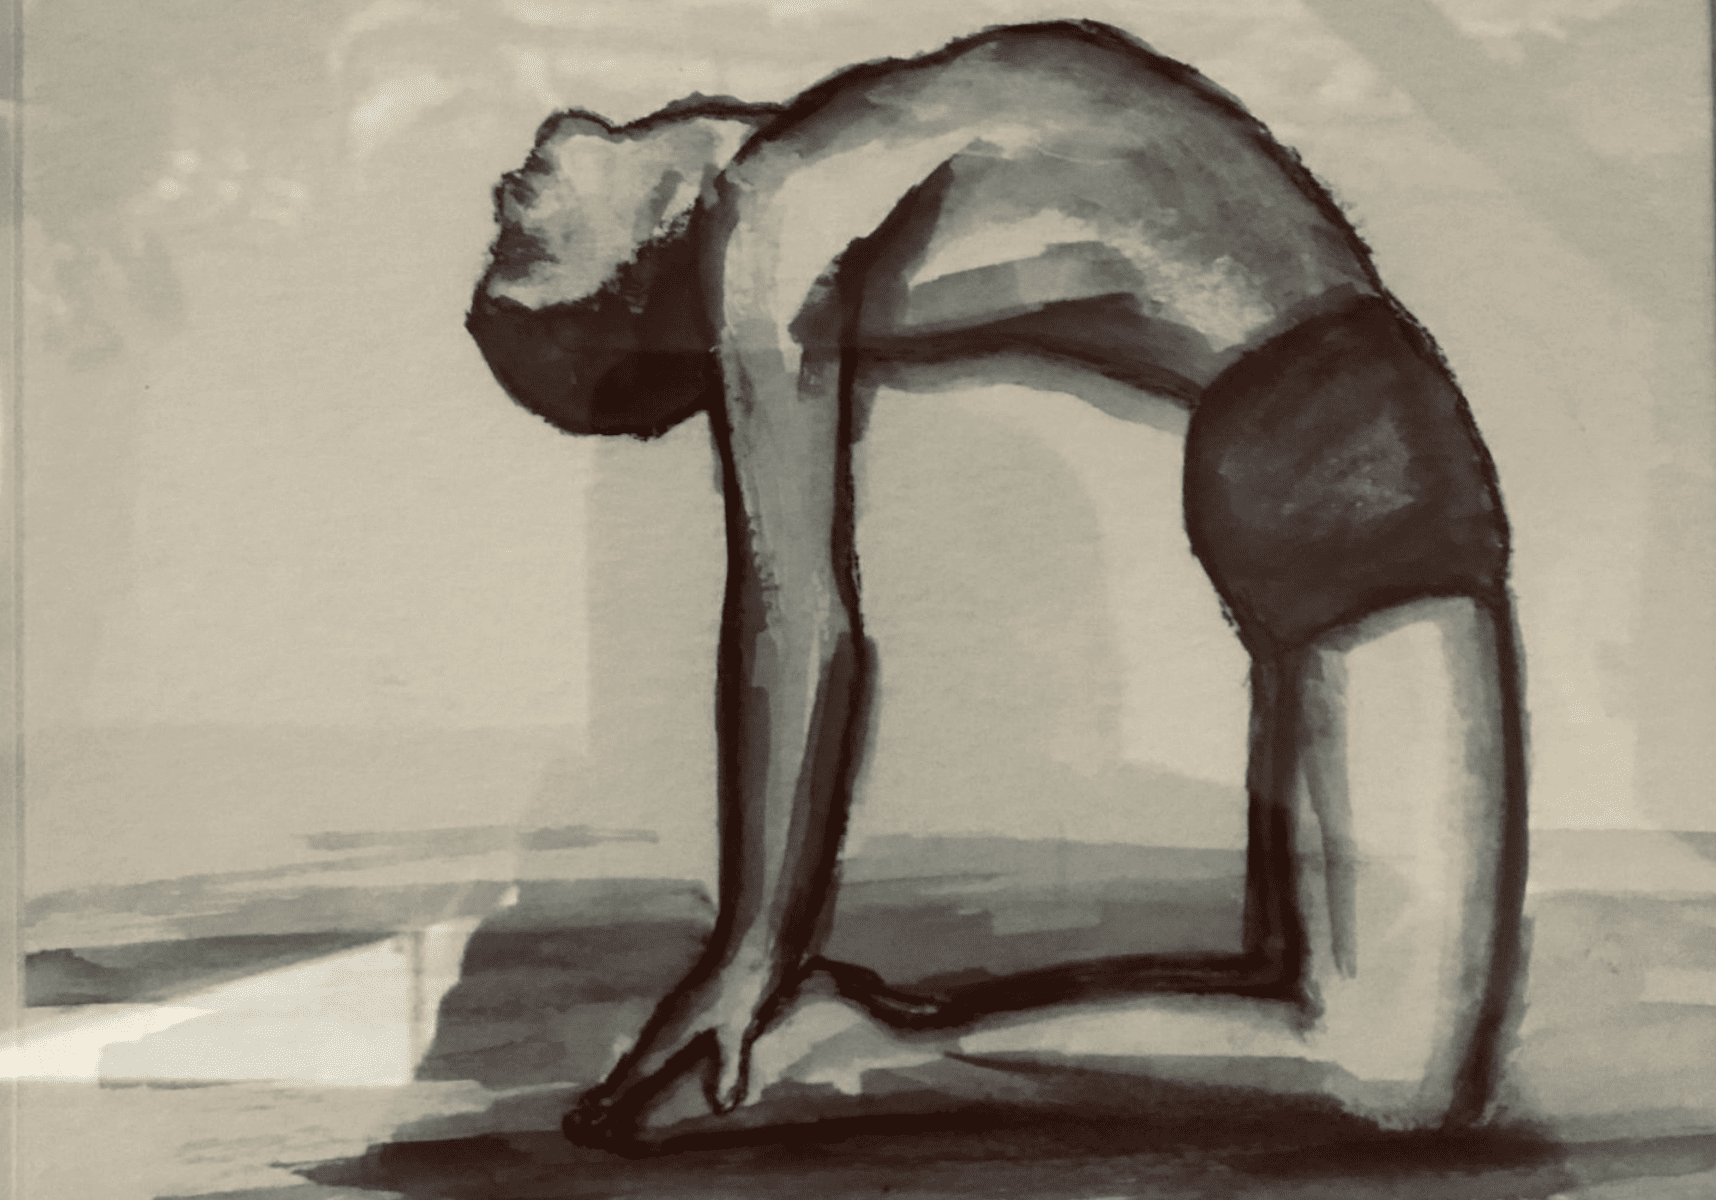 Is Yoga Spirituality Compatible with Christianity?